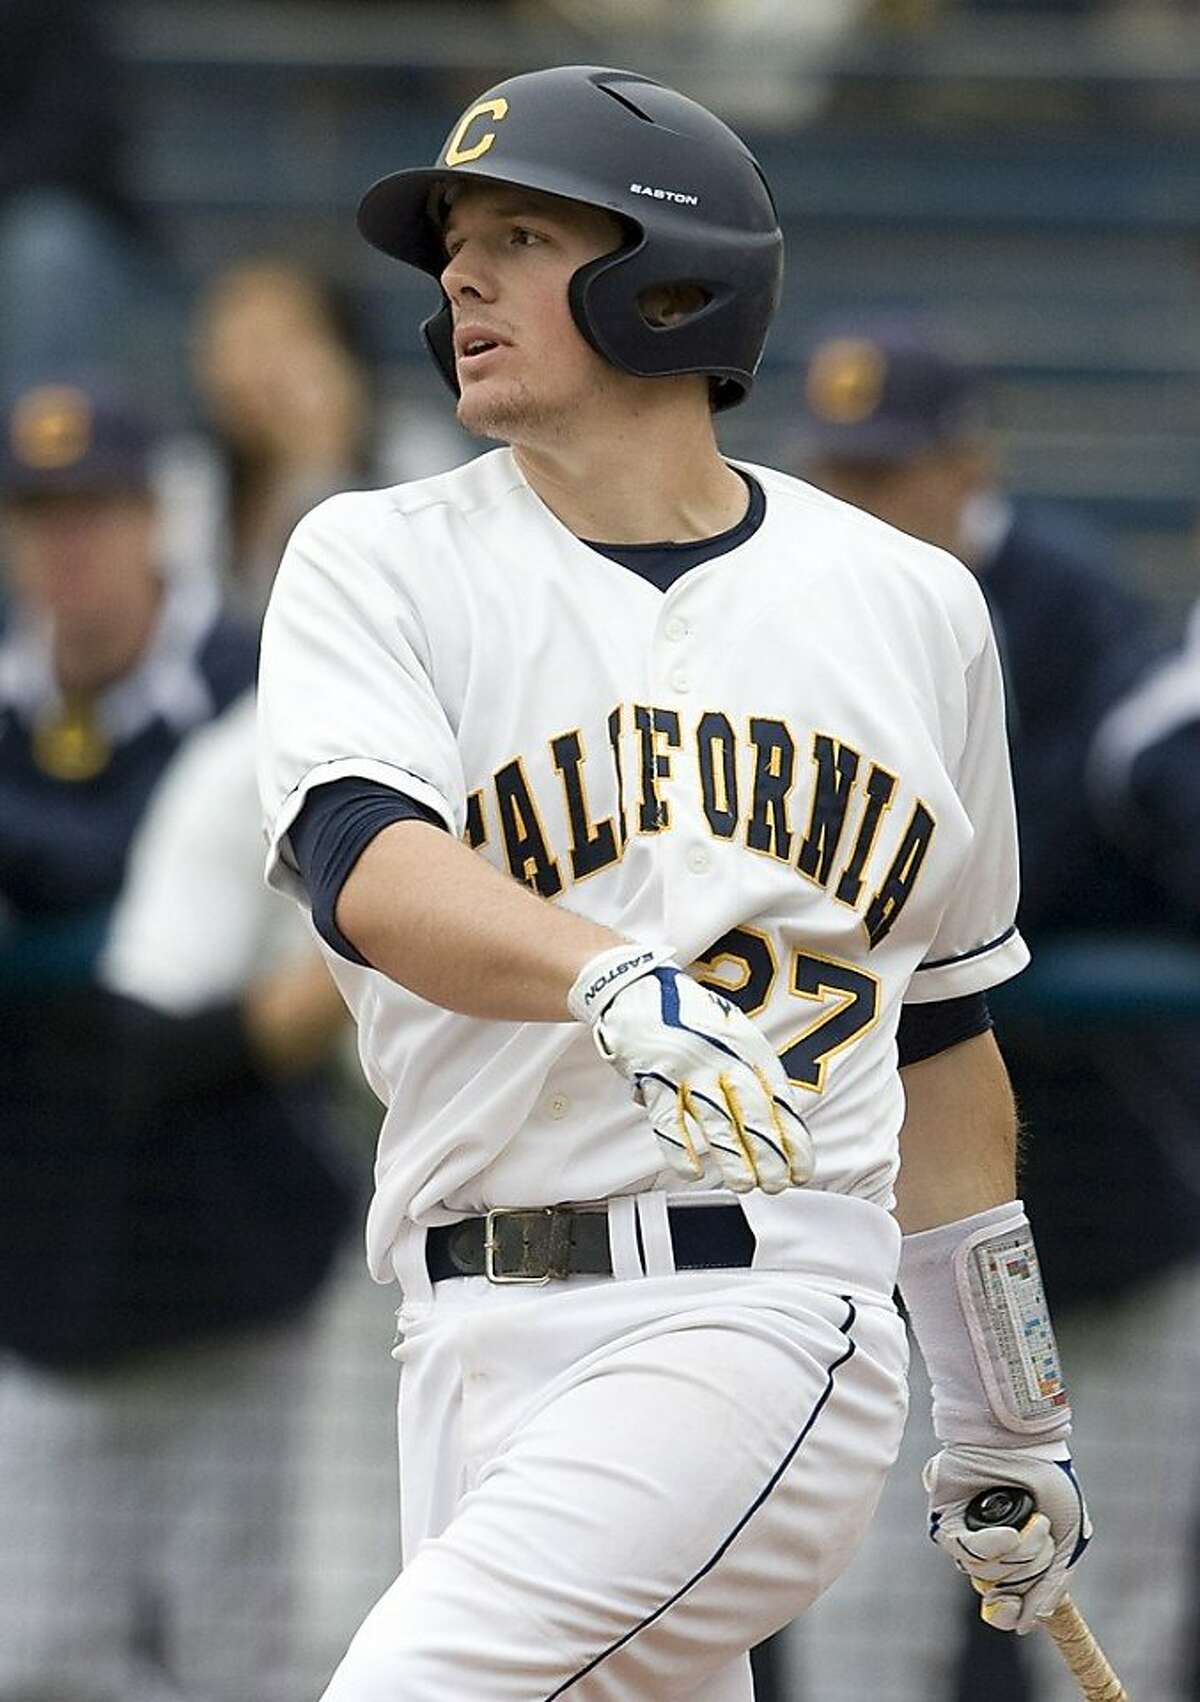 Chadd Krist, Cal baseball, 2011.